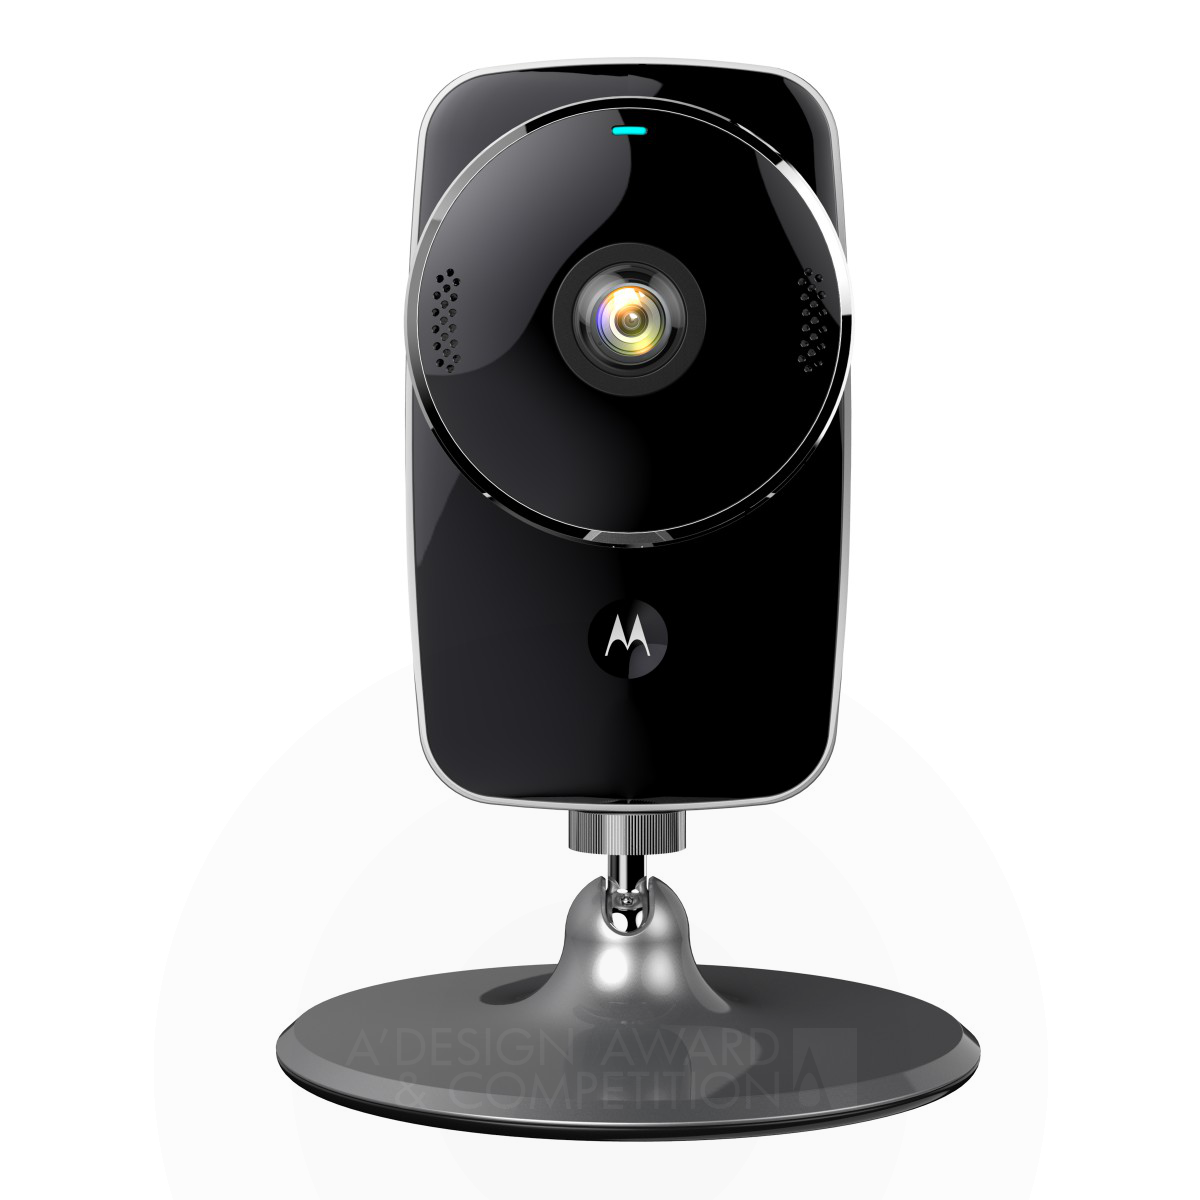 Motorola Focus 1000 camera – by Binatone Portable Wi-Fi IP camera by Chow Hung Pong, Valentino